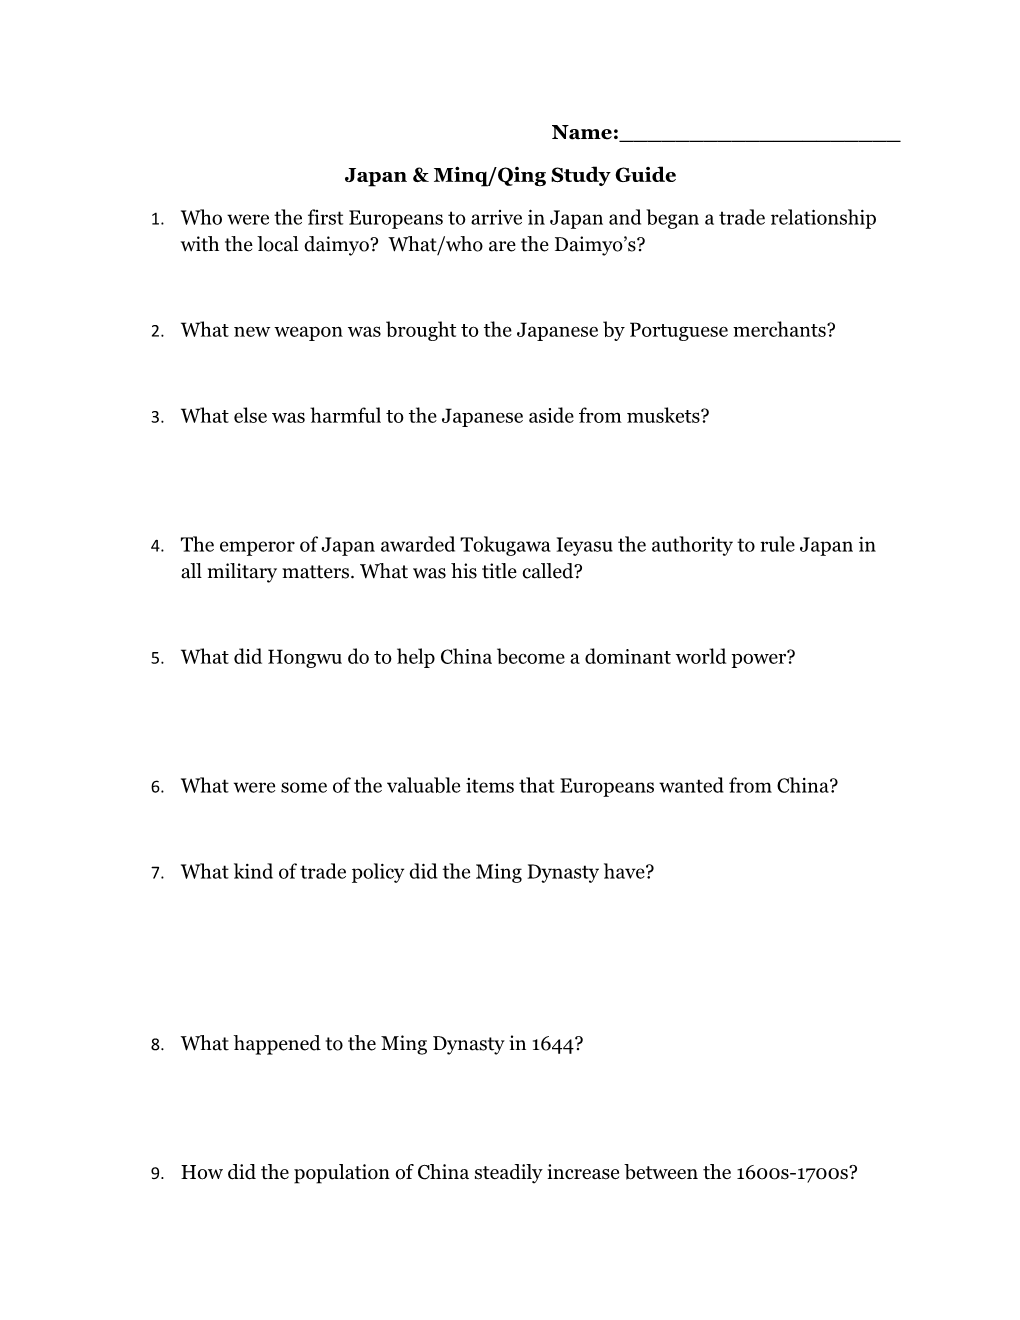 Japan & Minq/Qing Study Guide